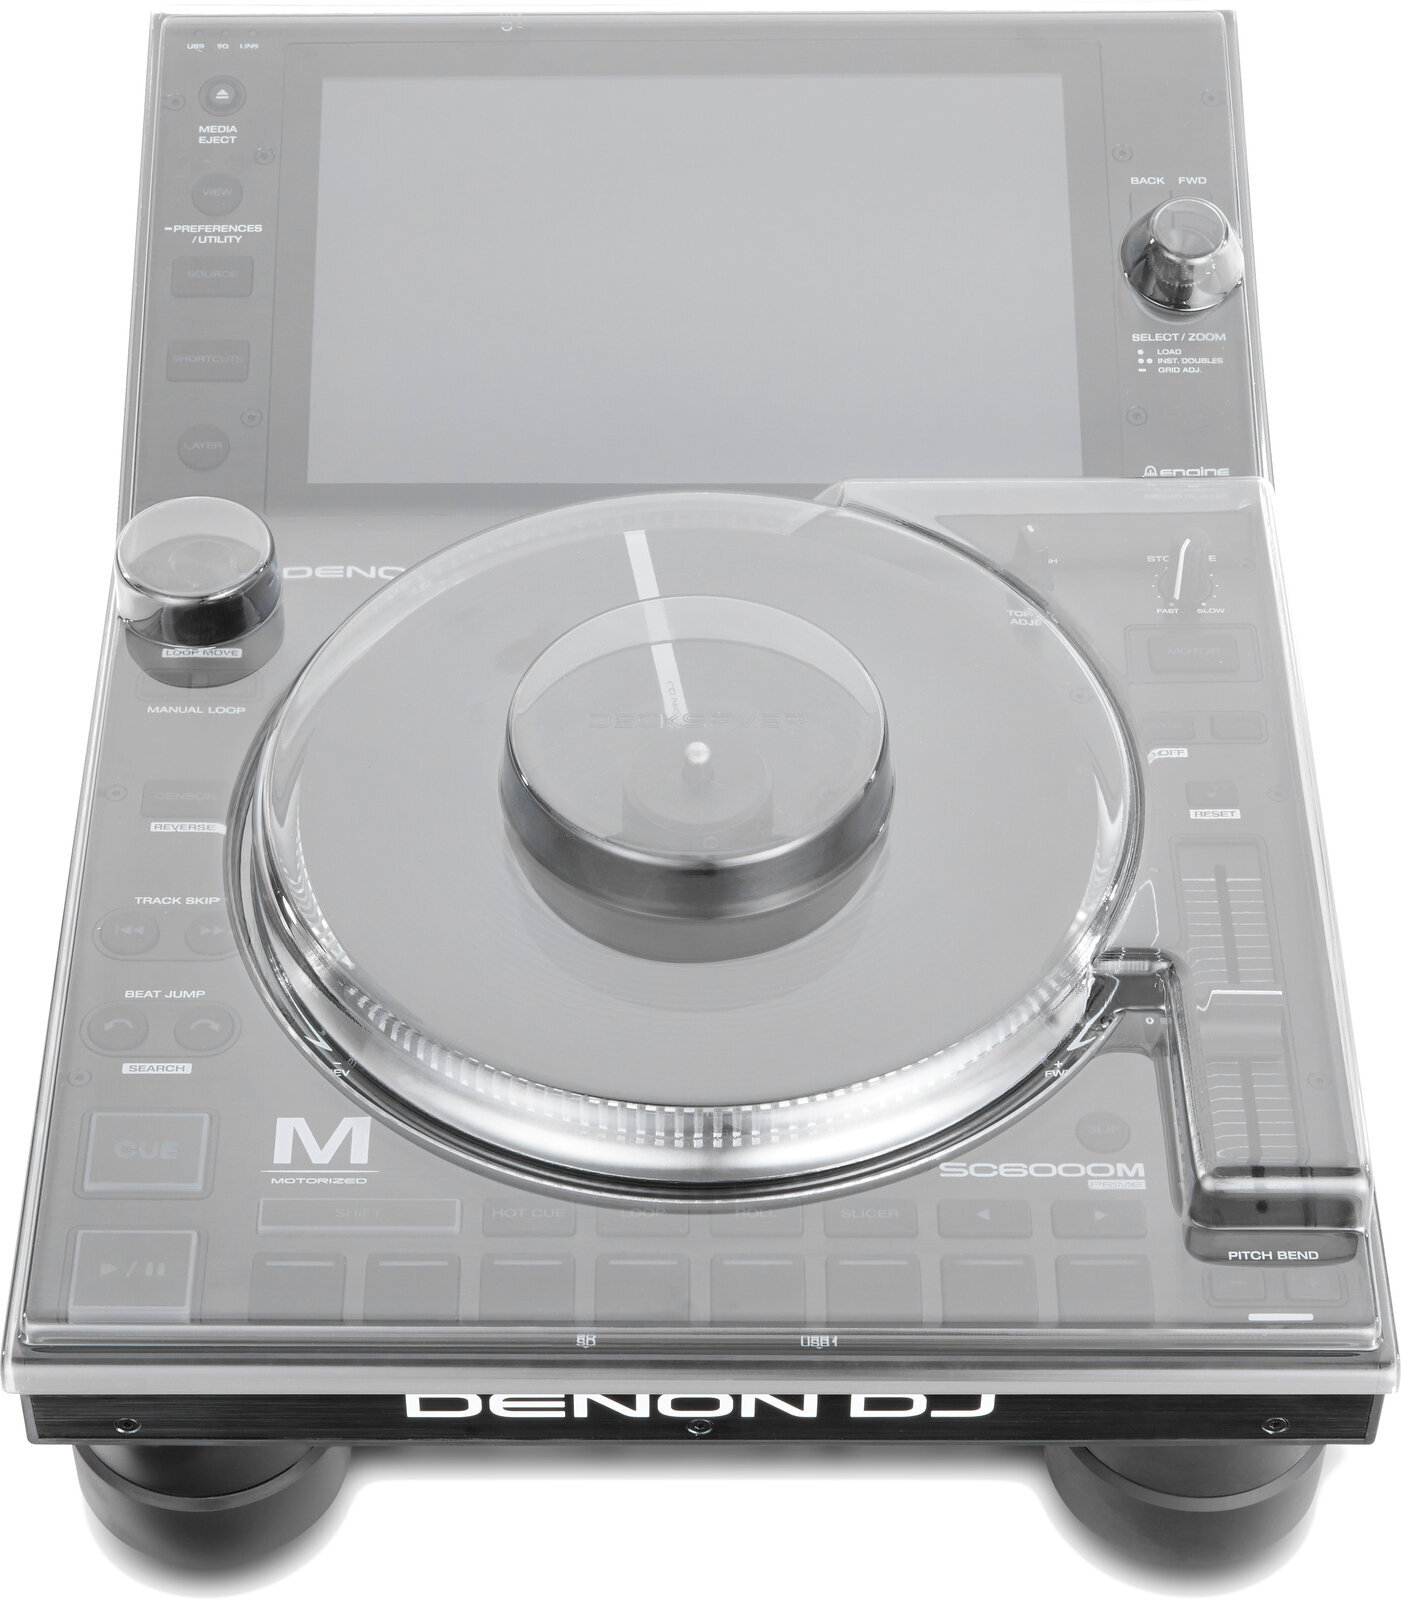 DJ lejátszó takaró Decksaver Denon DJ Prime SC6000/SC6000M